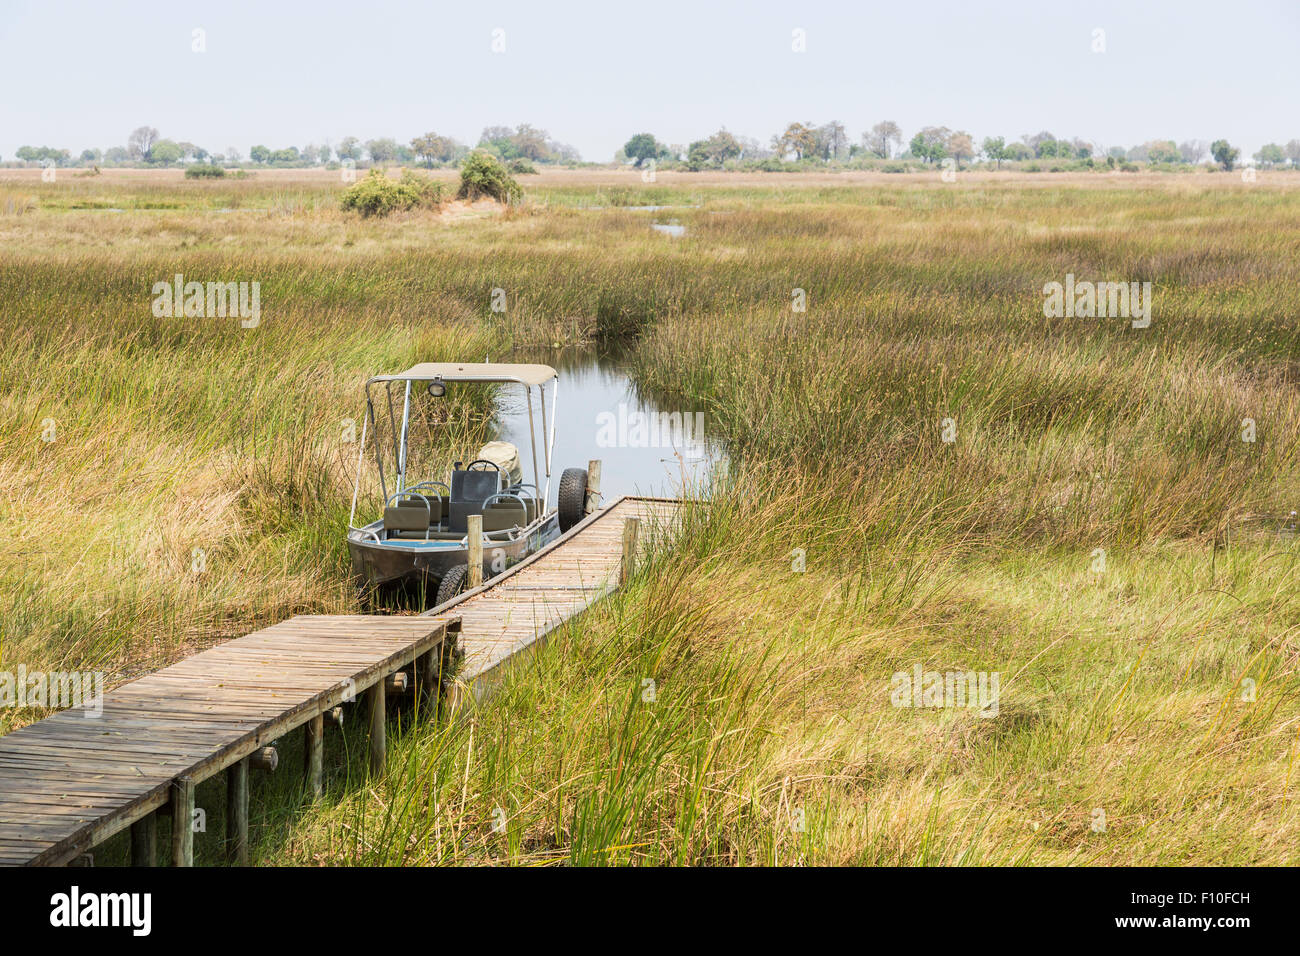 Safari-Motorboot vertäut am Steg in Bereitschaft für eine Flussfahrt für sightseeing, Duba Plains Camp Okavango Delta, Nord-Botswana, Südafrika Stockfoto